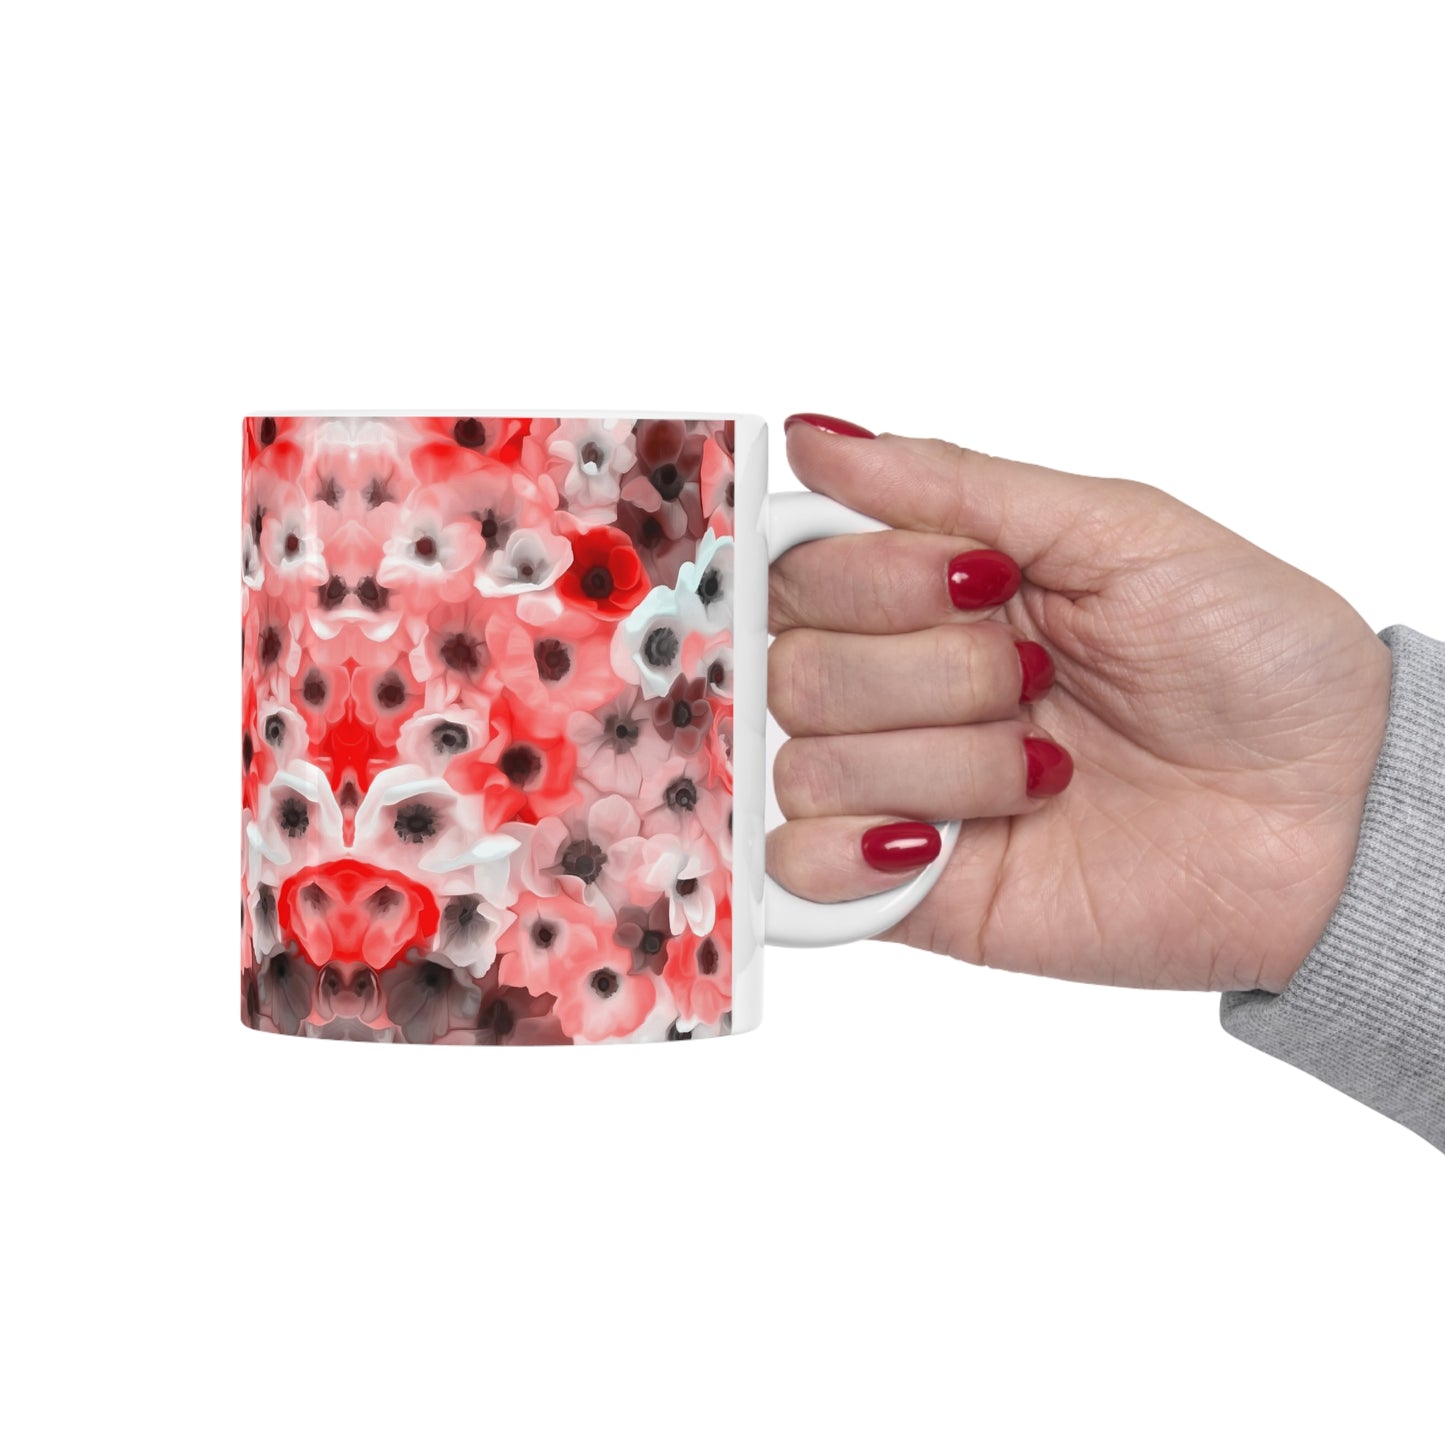 Coral Floral Fantasy Art to Drink Ceramic Coffee Mug 11oz